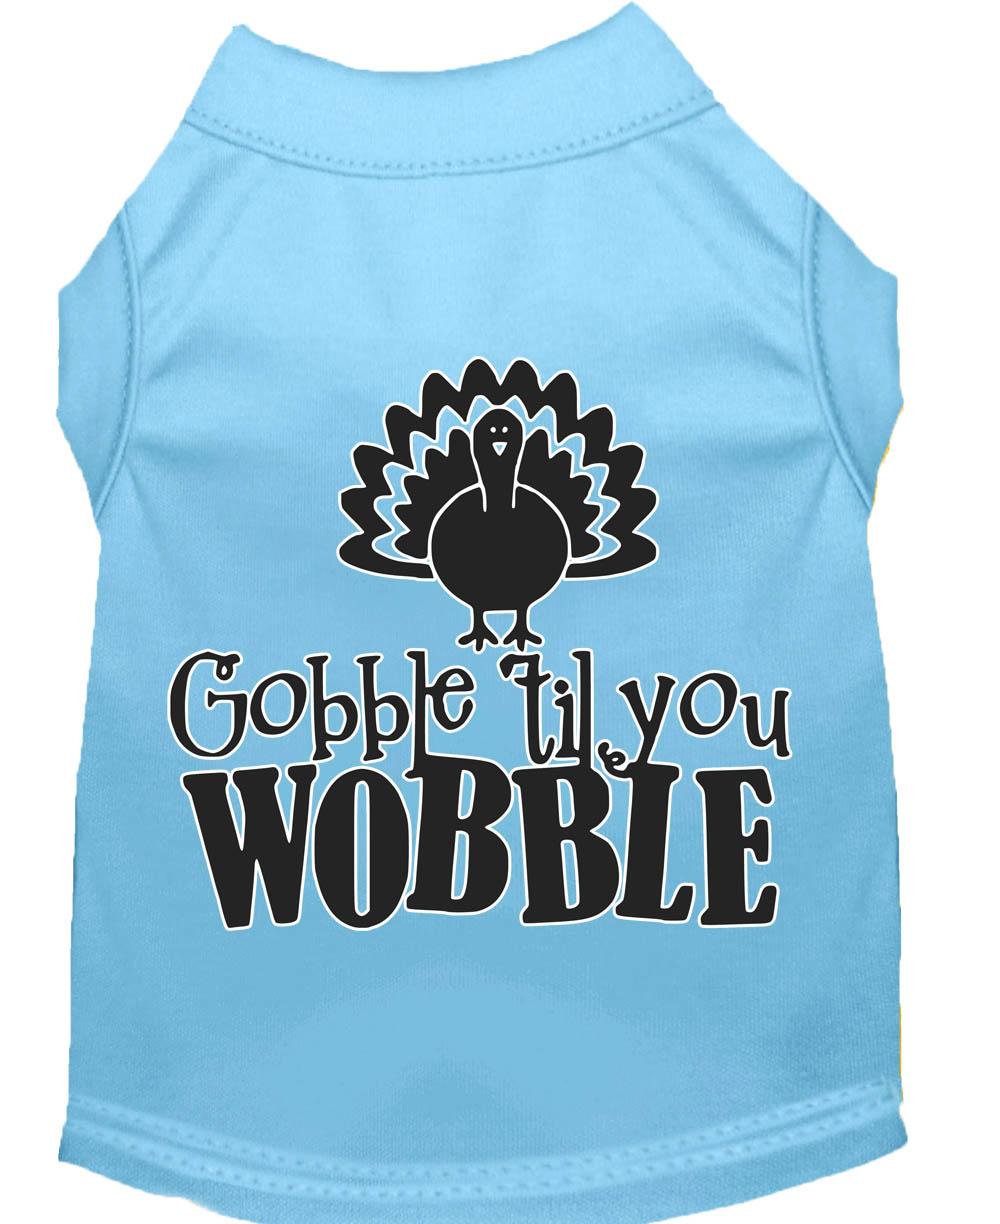 Gobble til You Wobble Screen Print Dog Shirt Baby Blue XL